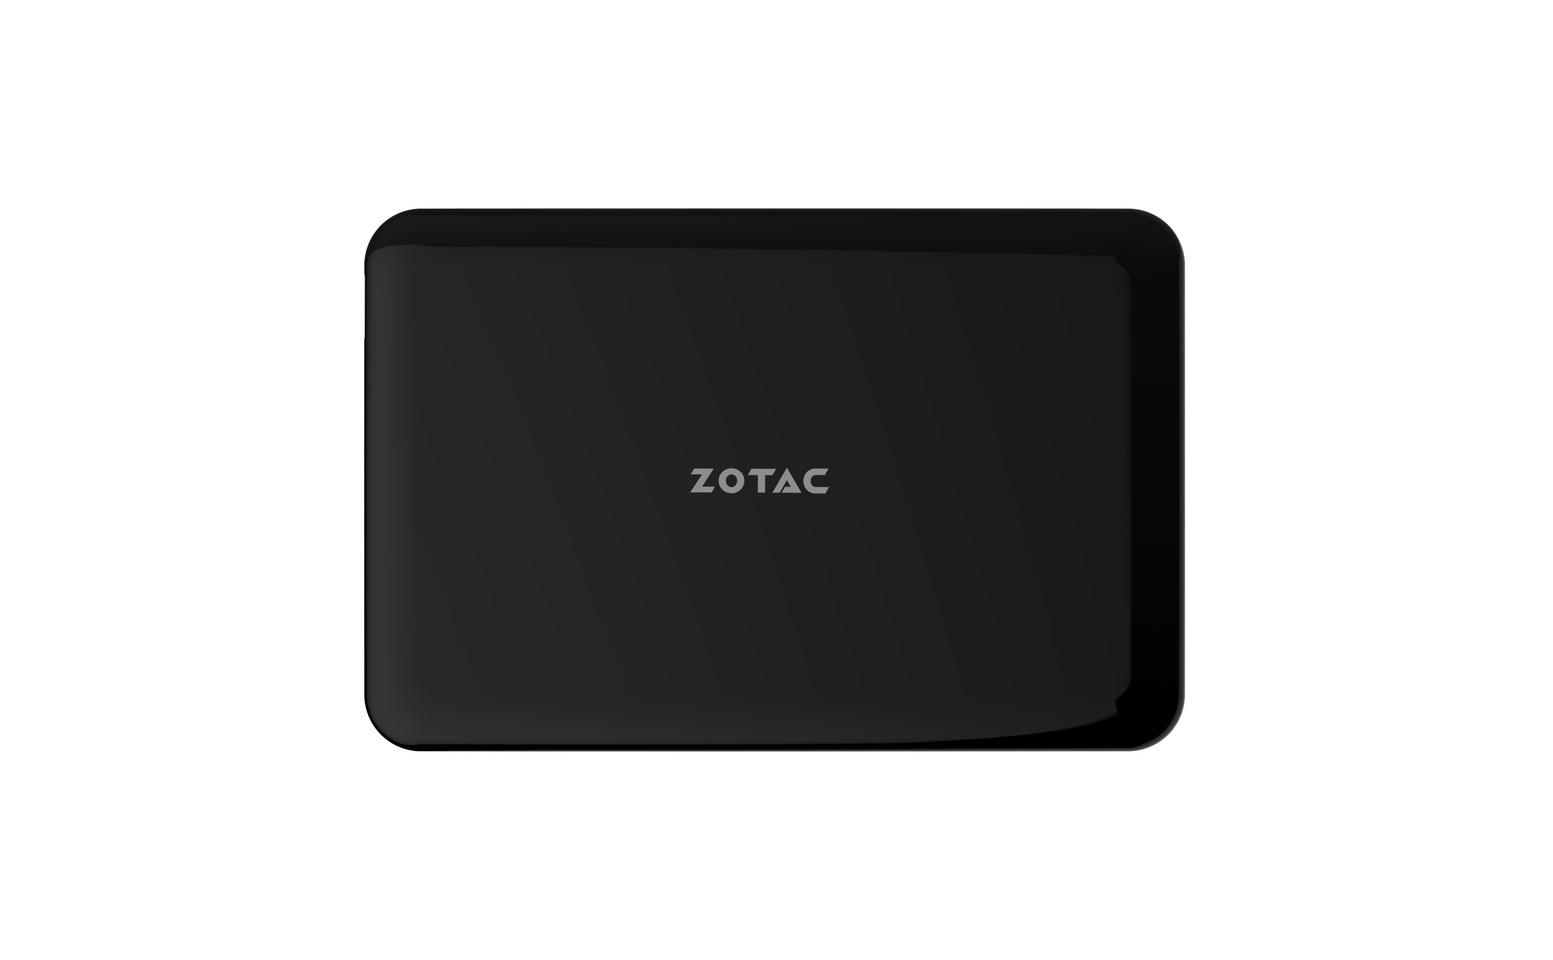 ZOTAC Shows Off MEK MINI Gaming PC, ZBOX Mini PCS and More at CES 2019